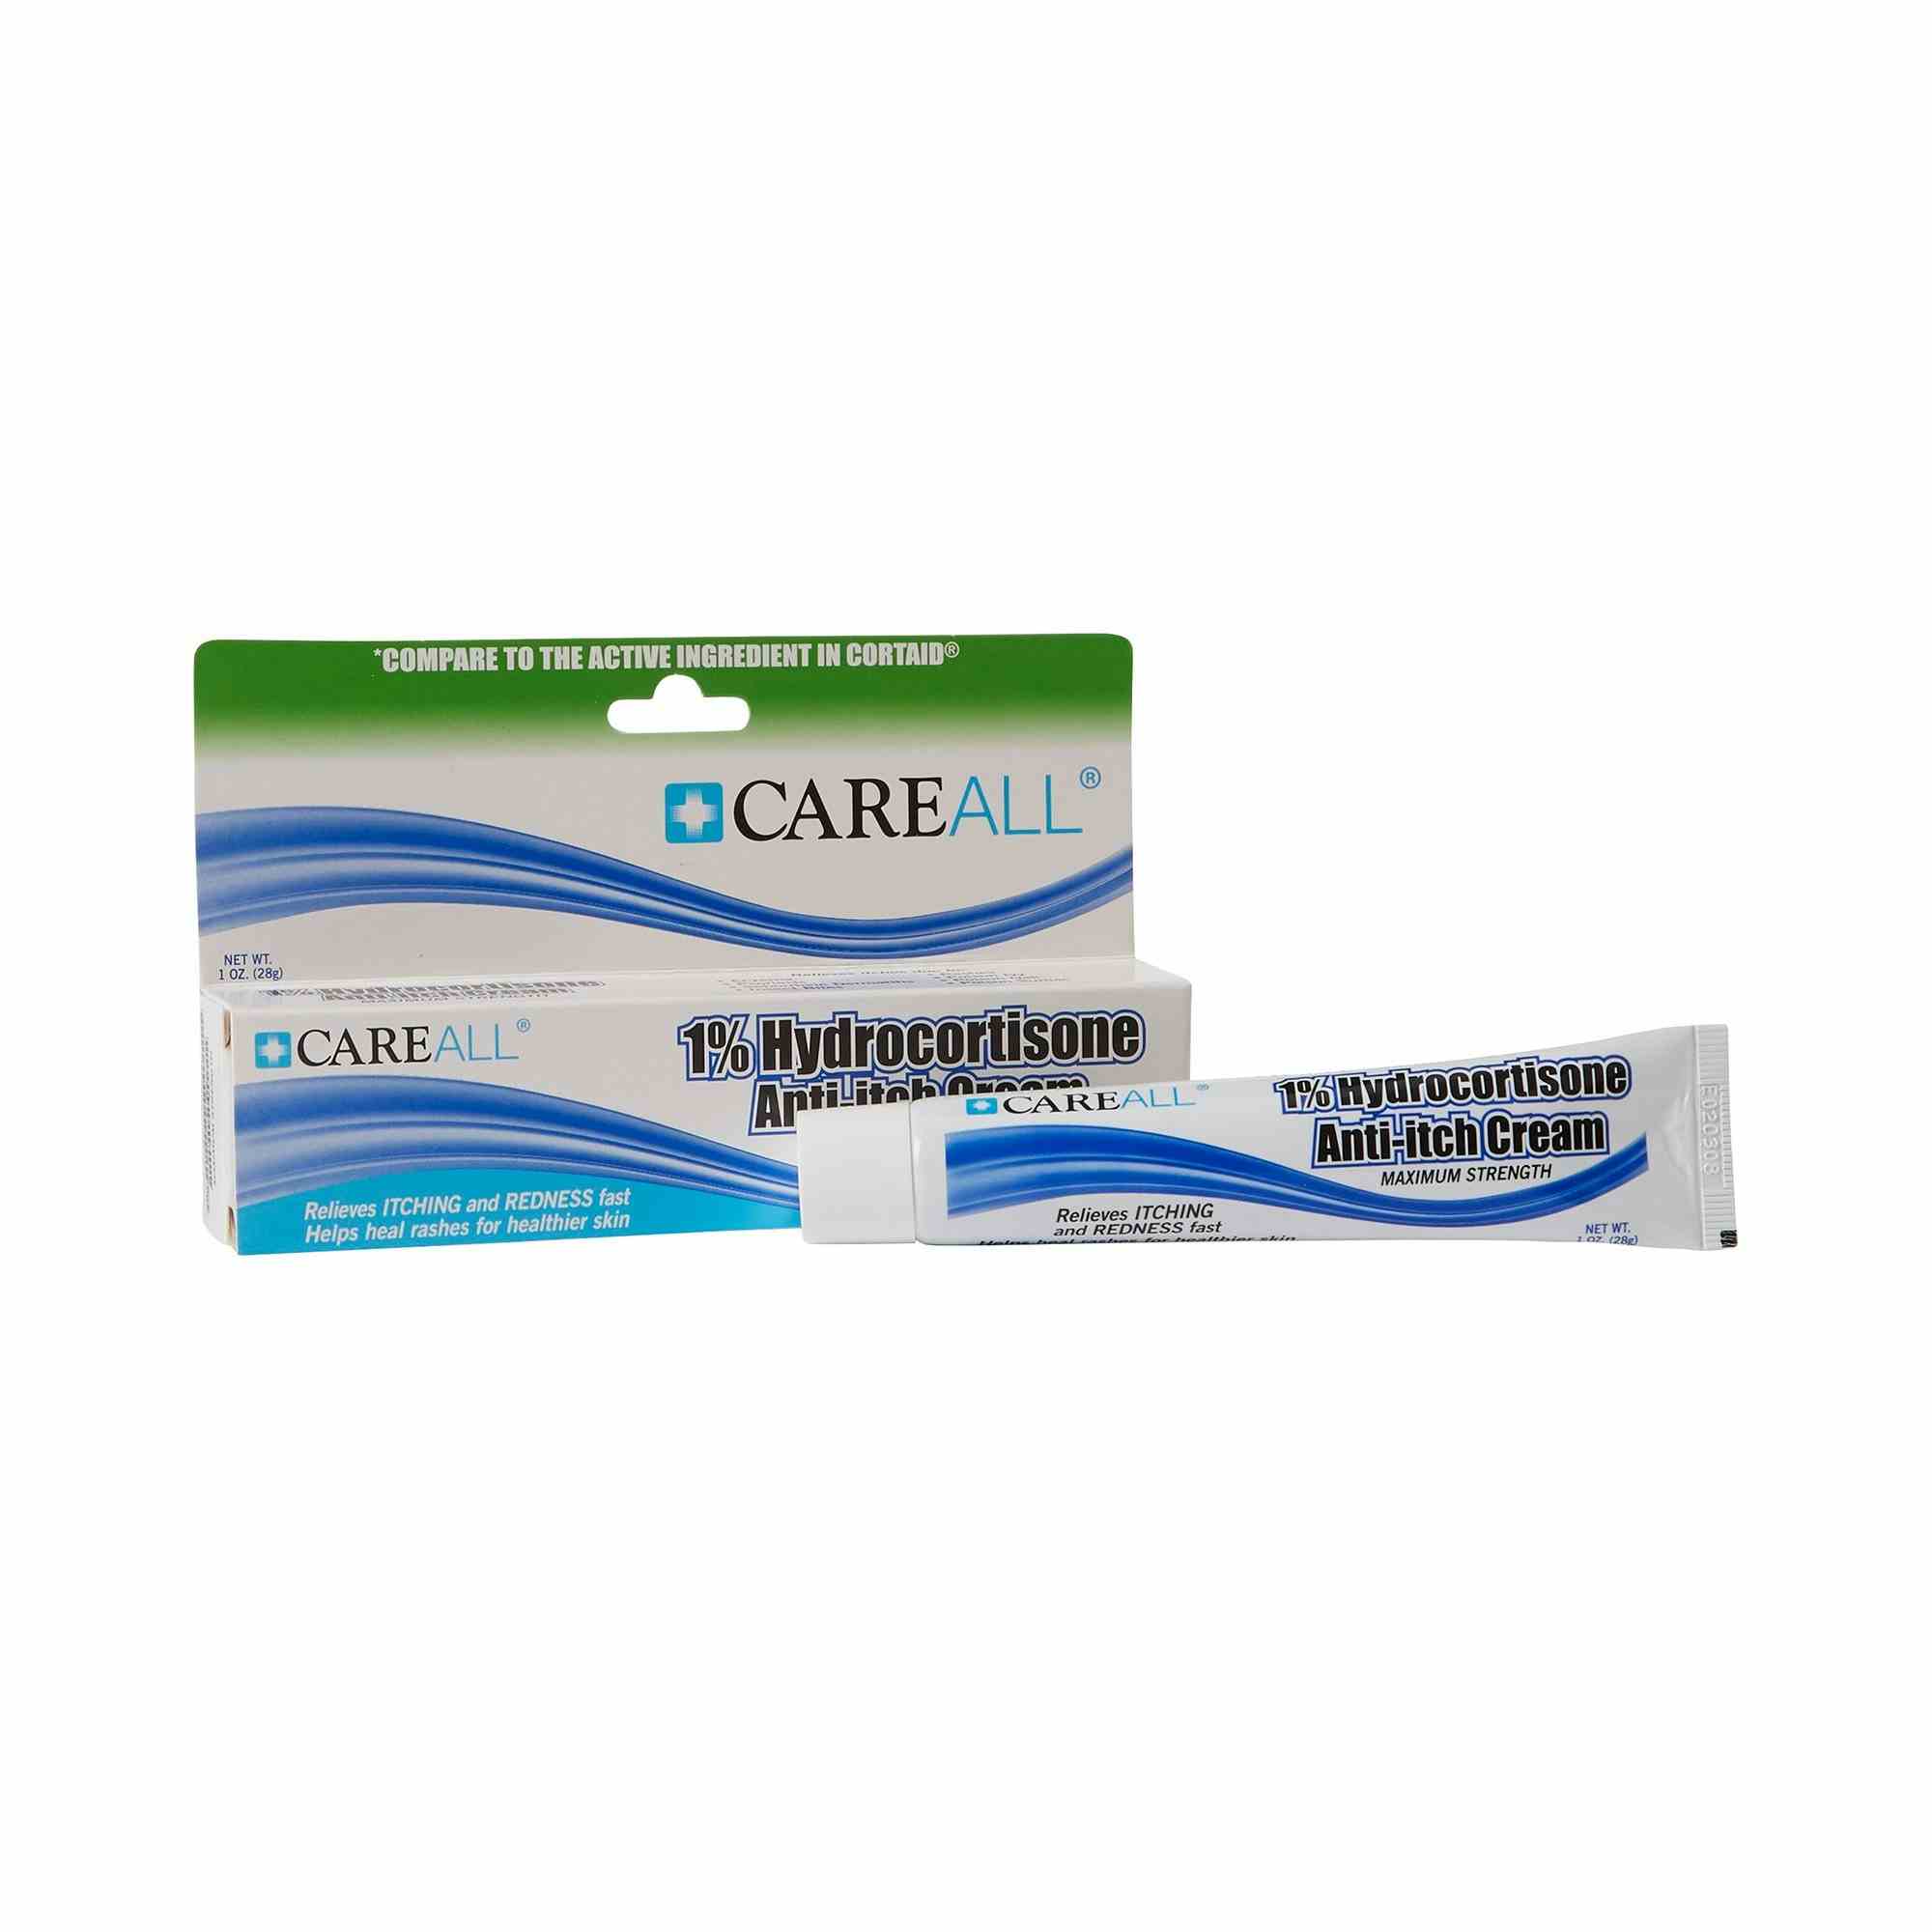 CareAll Maxium Strength 1% Hydrocortisone Anti-Itch Cream, HYD1, 1 Each